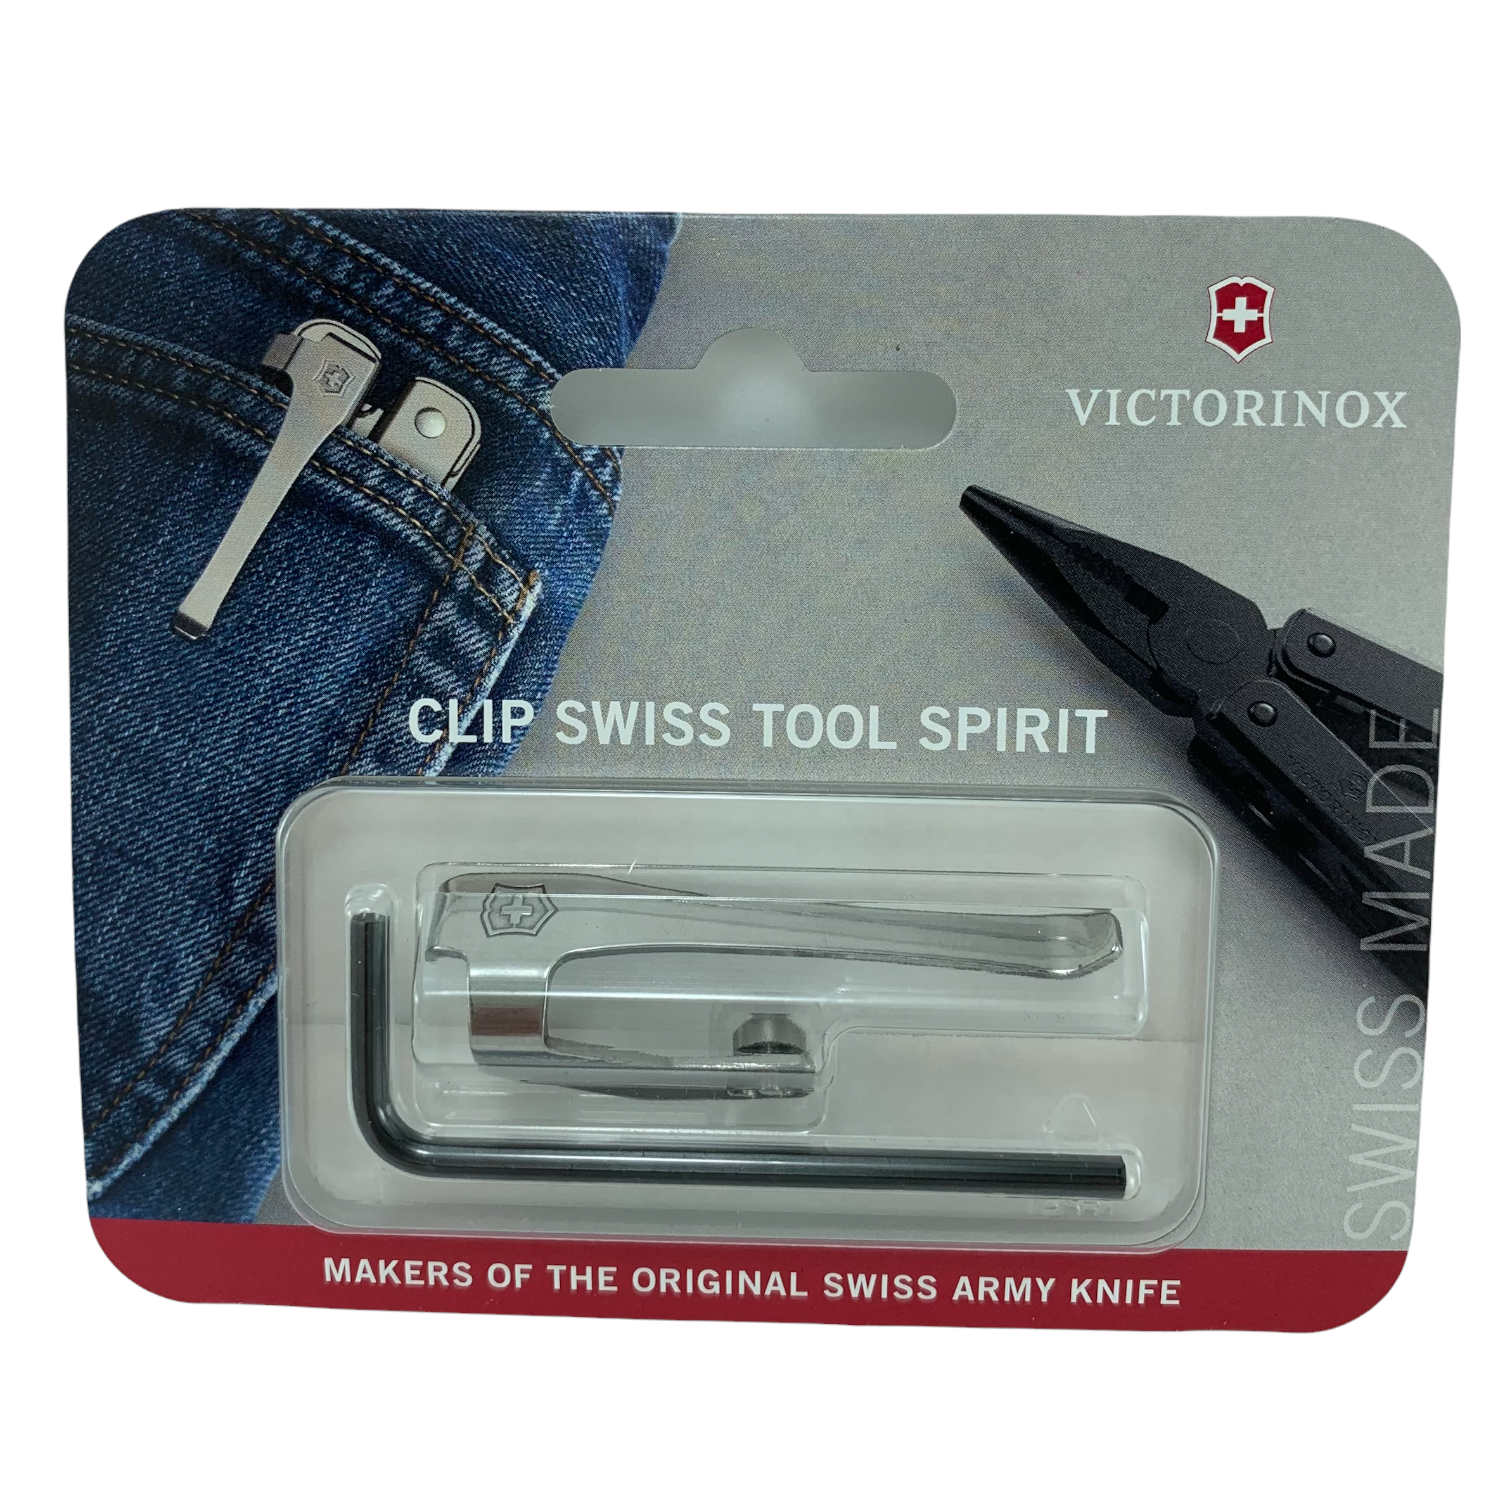 Clip Swiss Tool Spirit